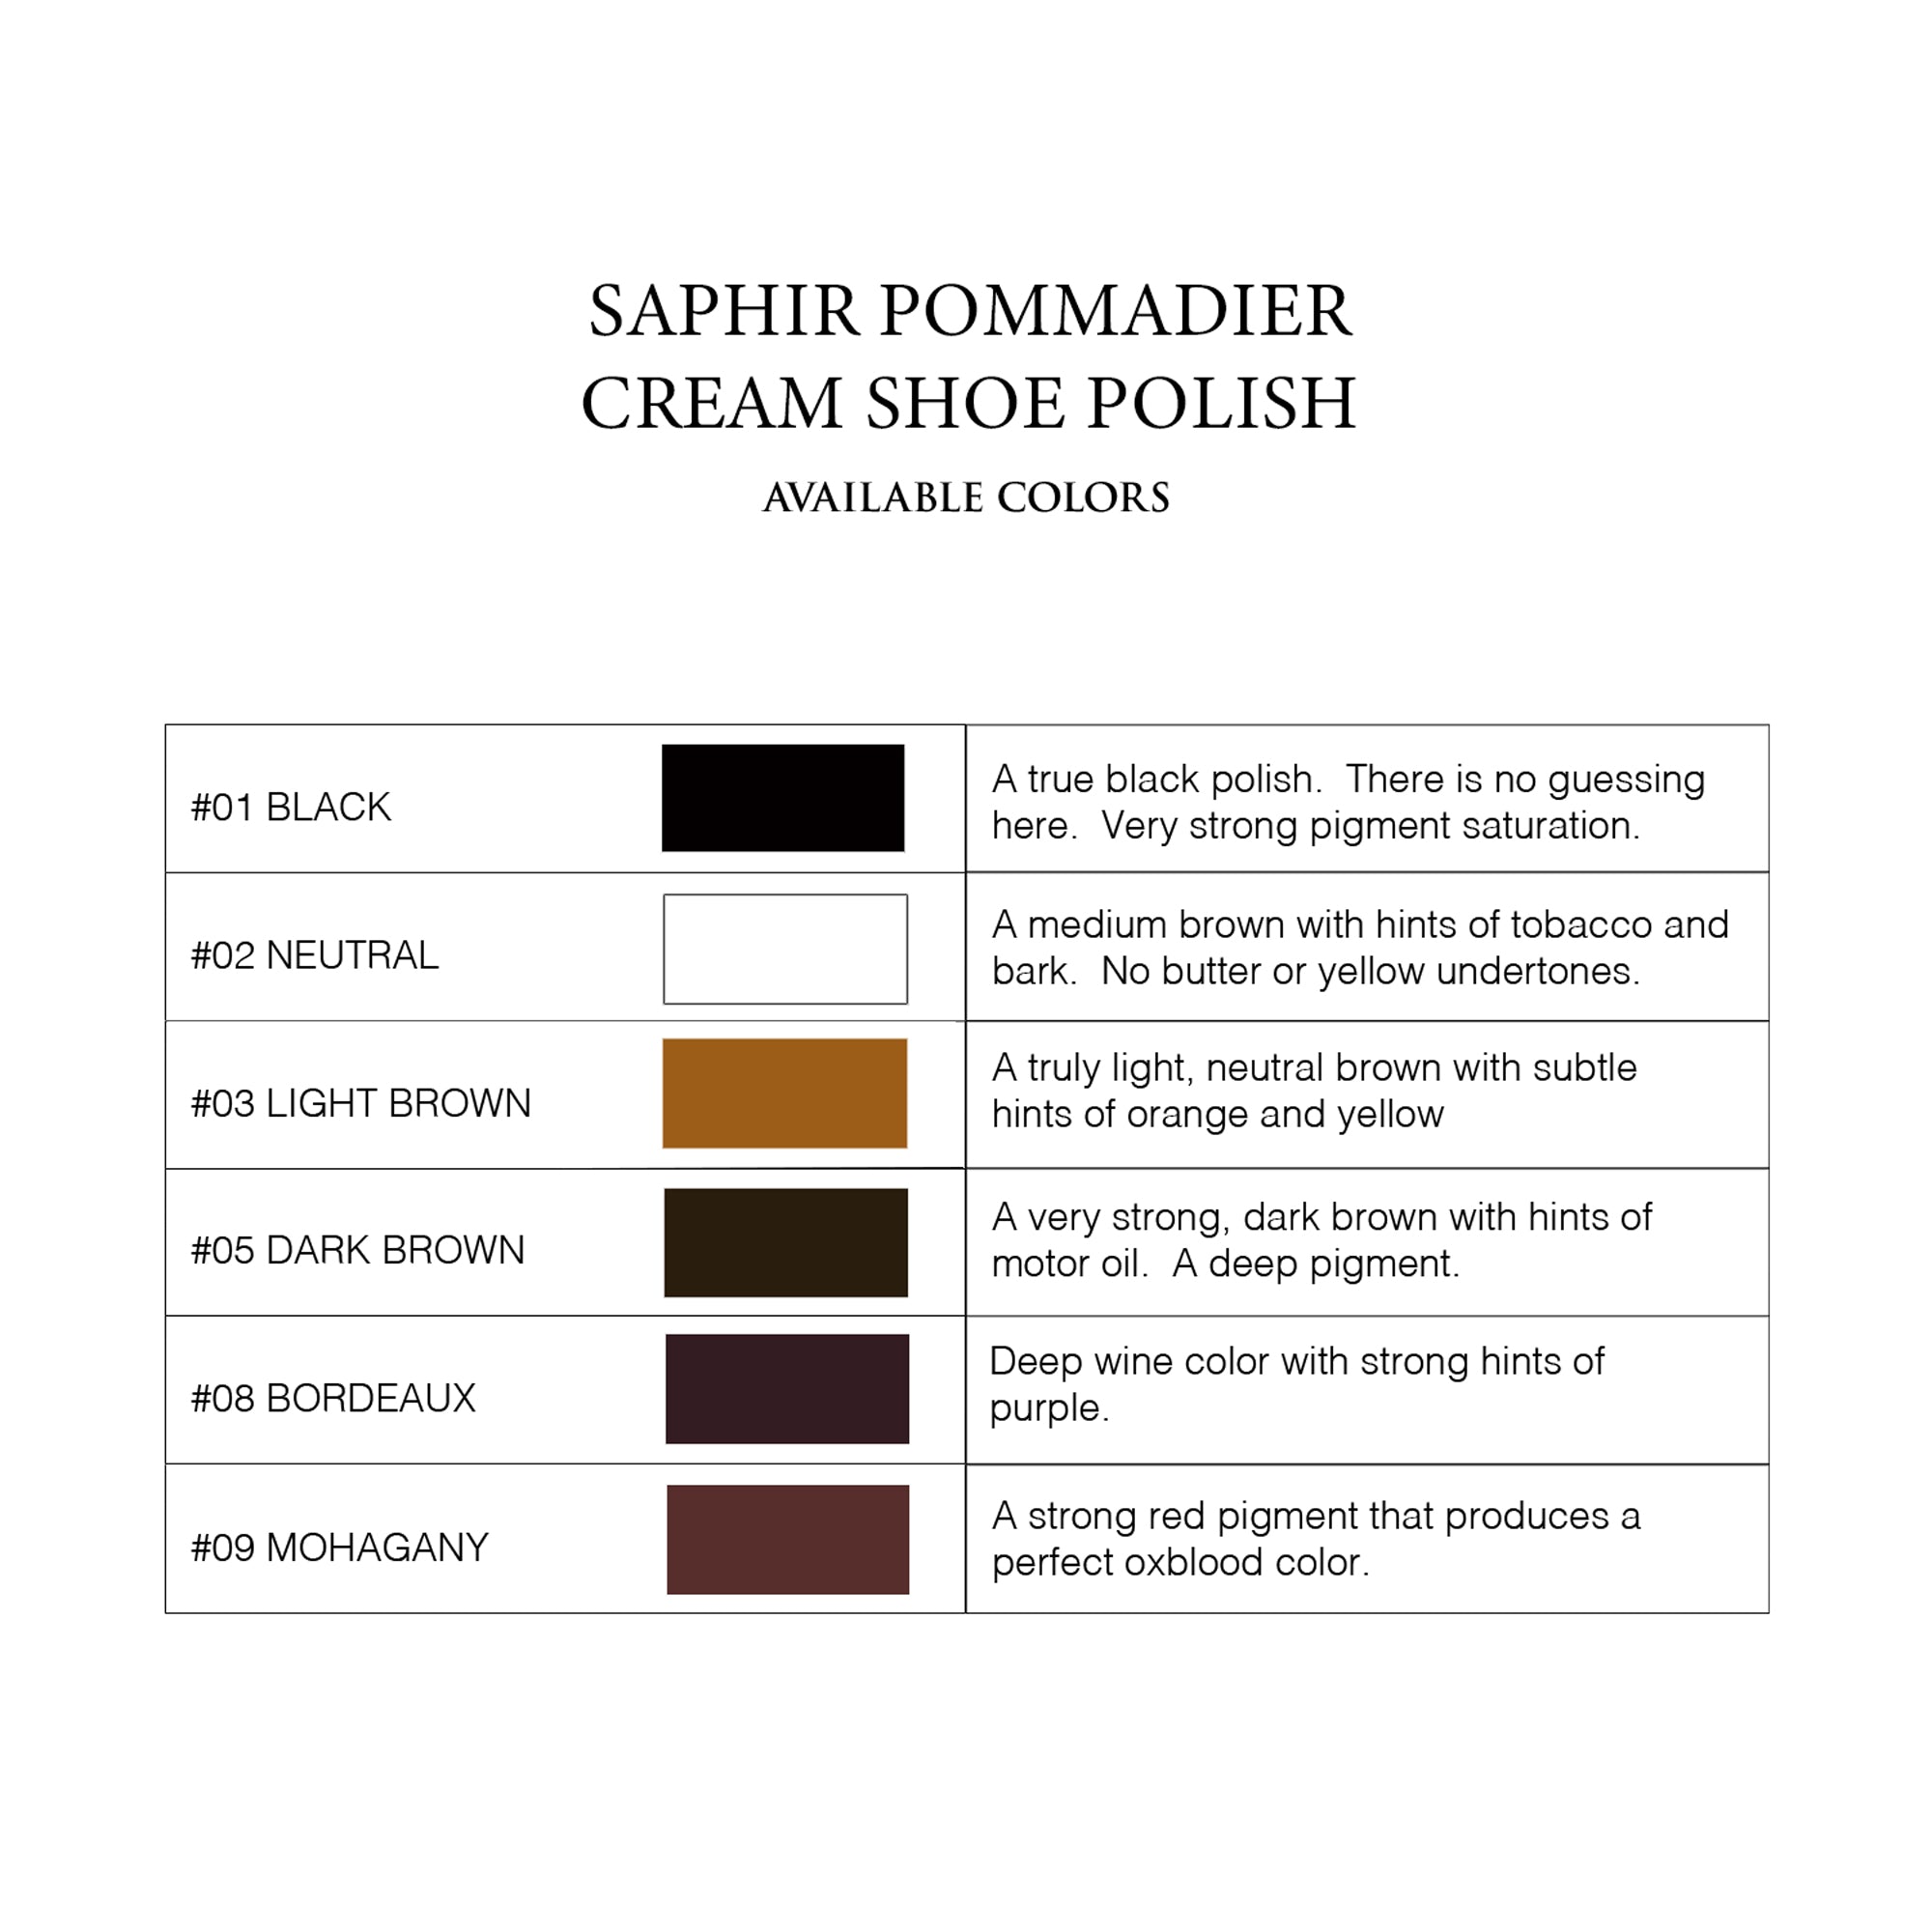 KirbyAllison.com's Saphir Pommadier Cream Polish Samples in cream color.